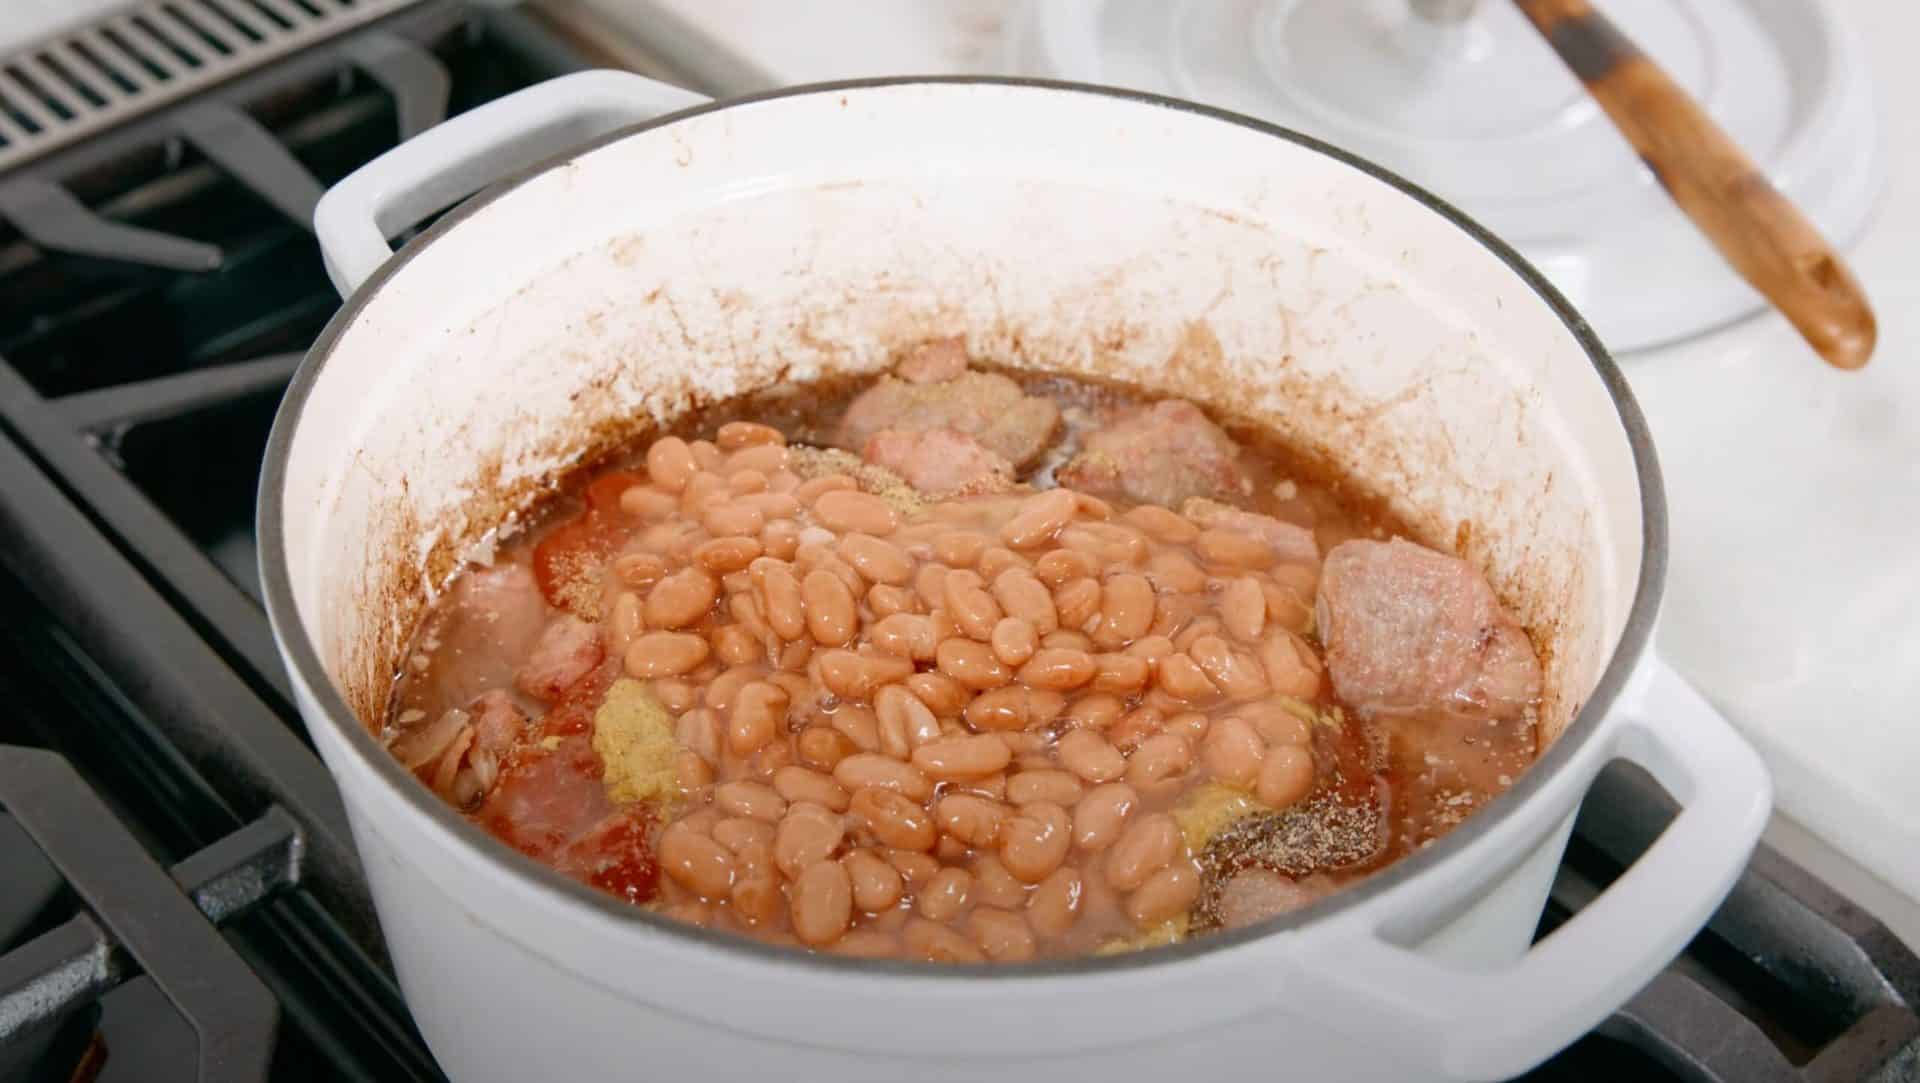 Pork and Beans - Step 3 beans